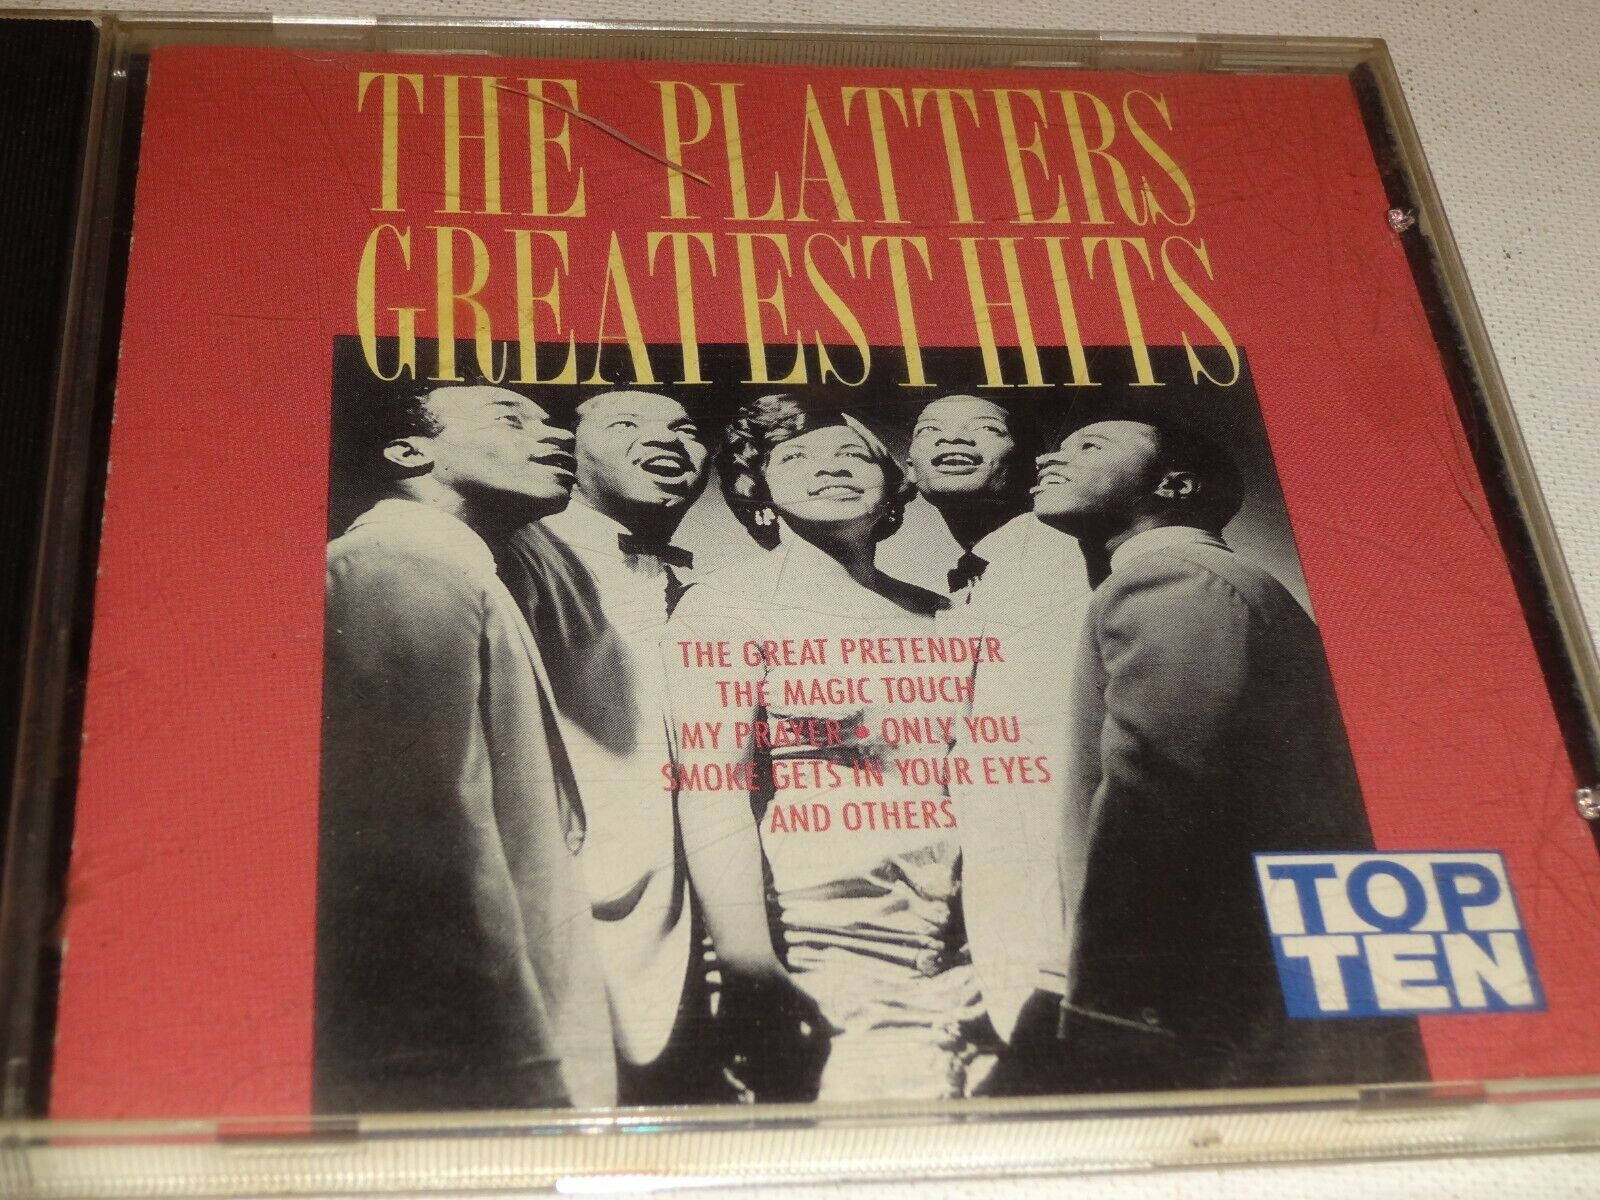 Platters Greatest Hits Cover Album Wallpaper